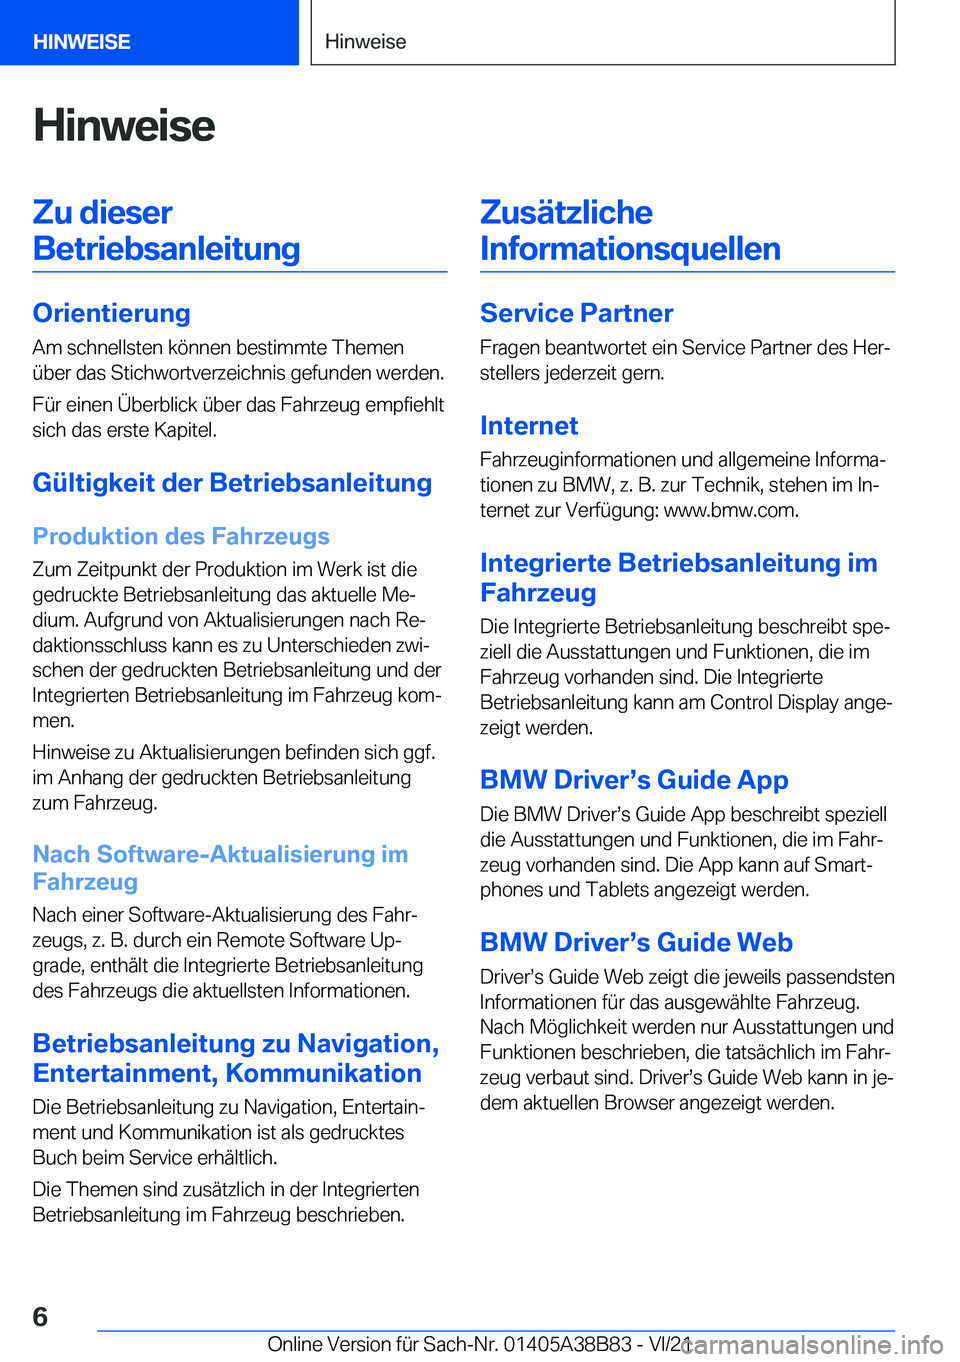 BMW M4 2022  Betriebsanleitungen (in German) �H�i�n�w�e�i�s�e�Z�u��d�i�e�s�e�r�B�e�t�r�i�e�b�s�a�n�l�e�i�t�u�n�g
�O�r�i�e�n�t�i�e�r�u�n�g �A�m��s�c�h�n�e�l�l�s�t�e�n��k�